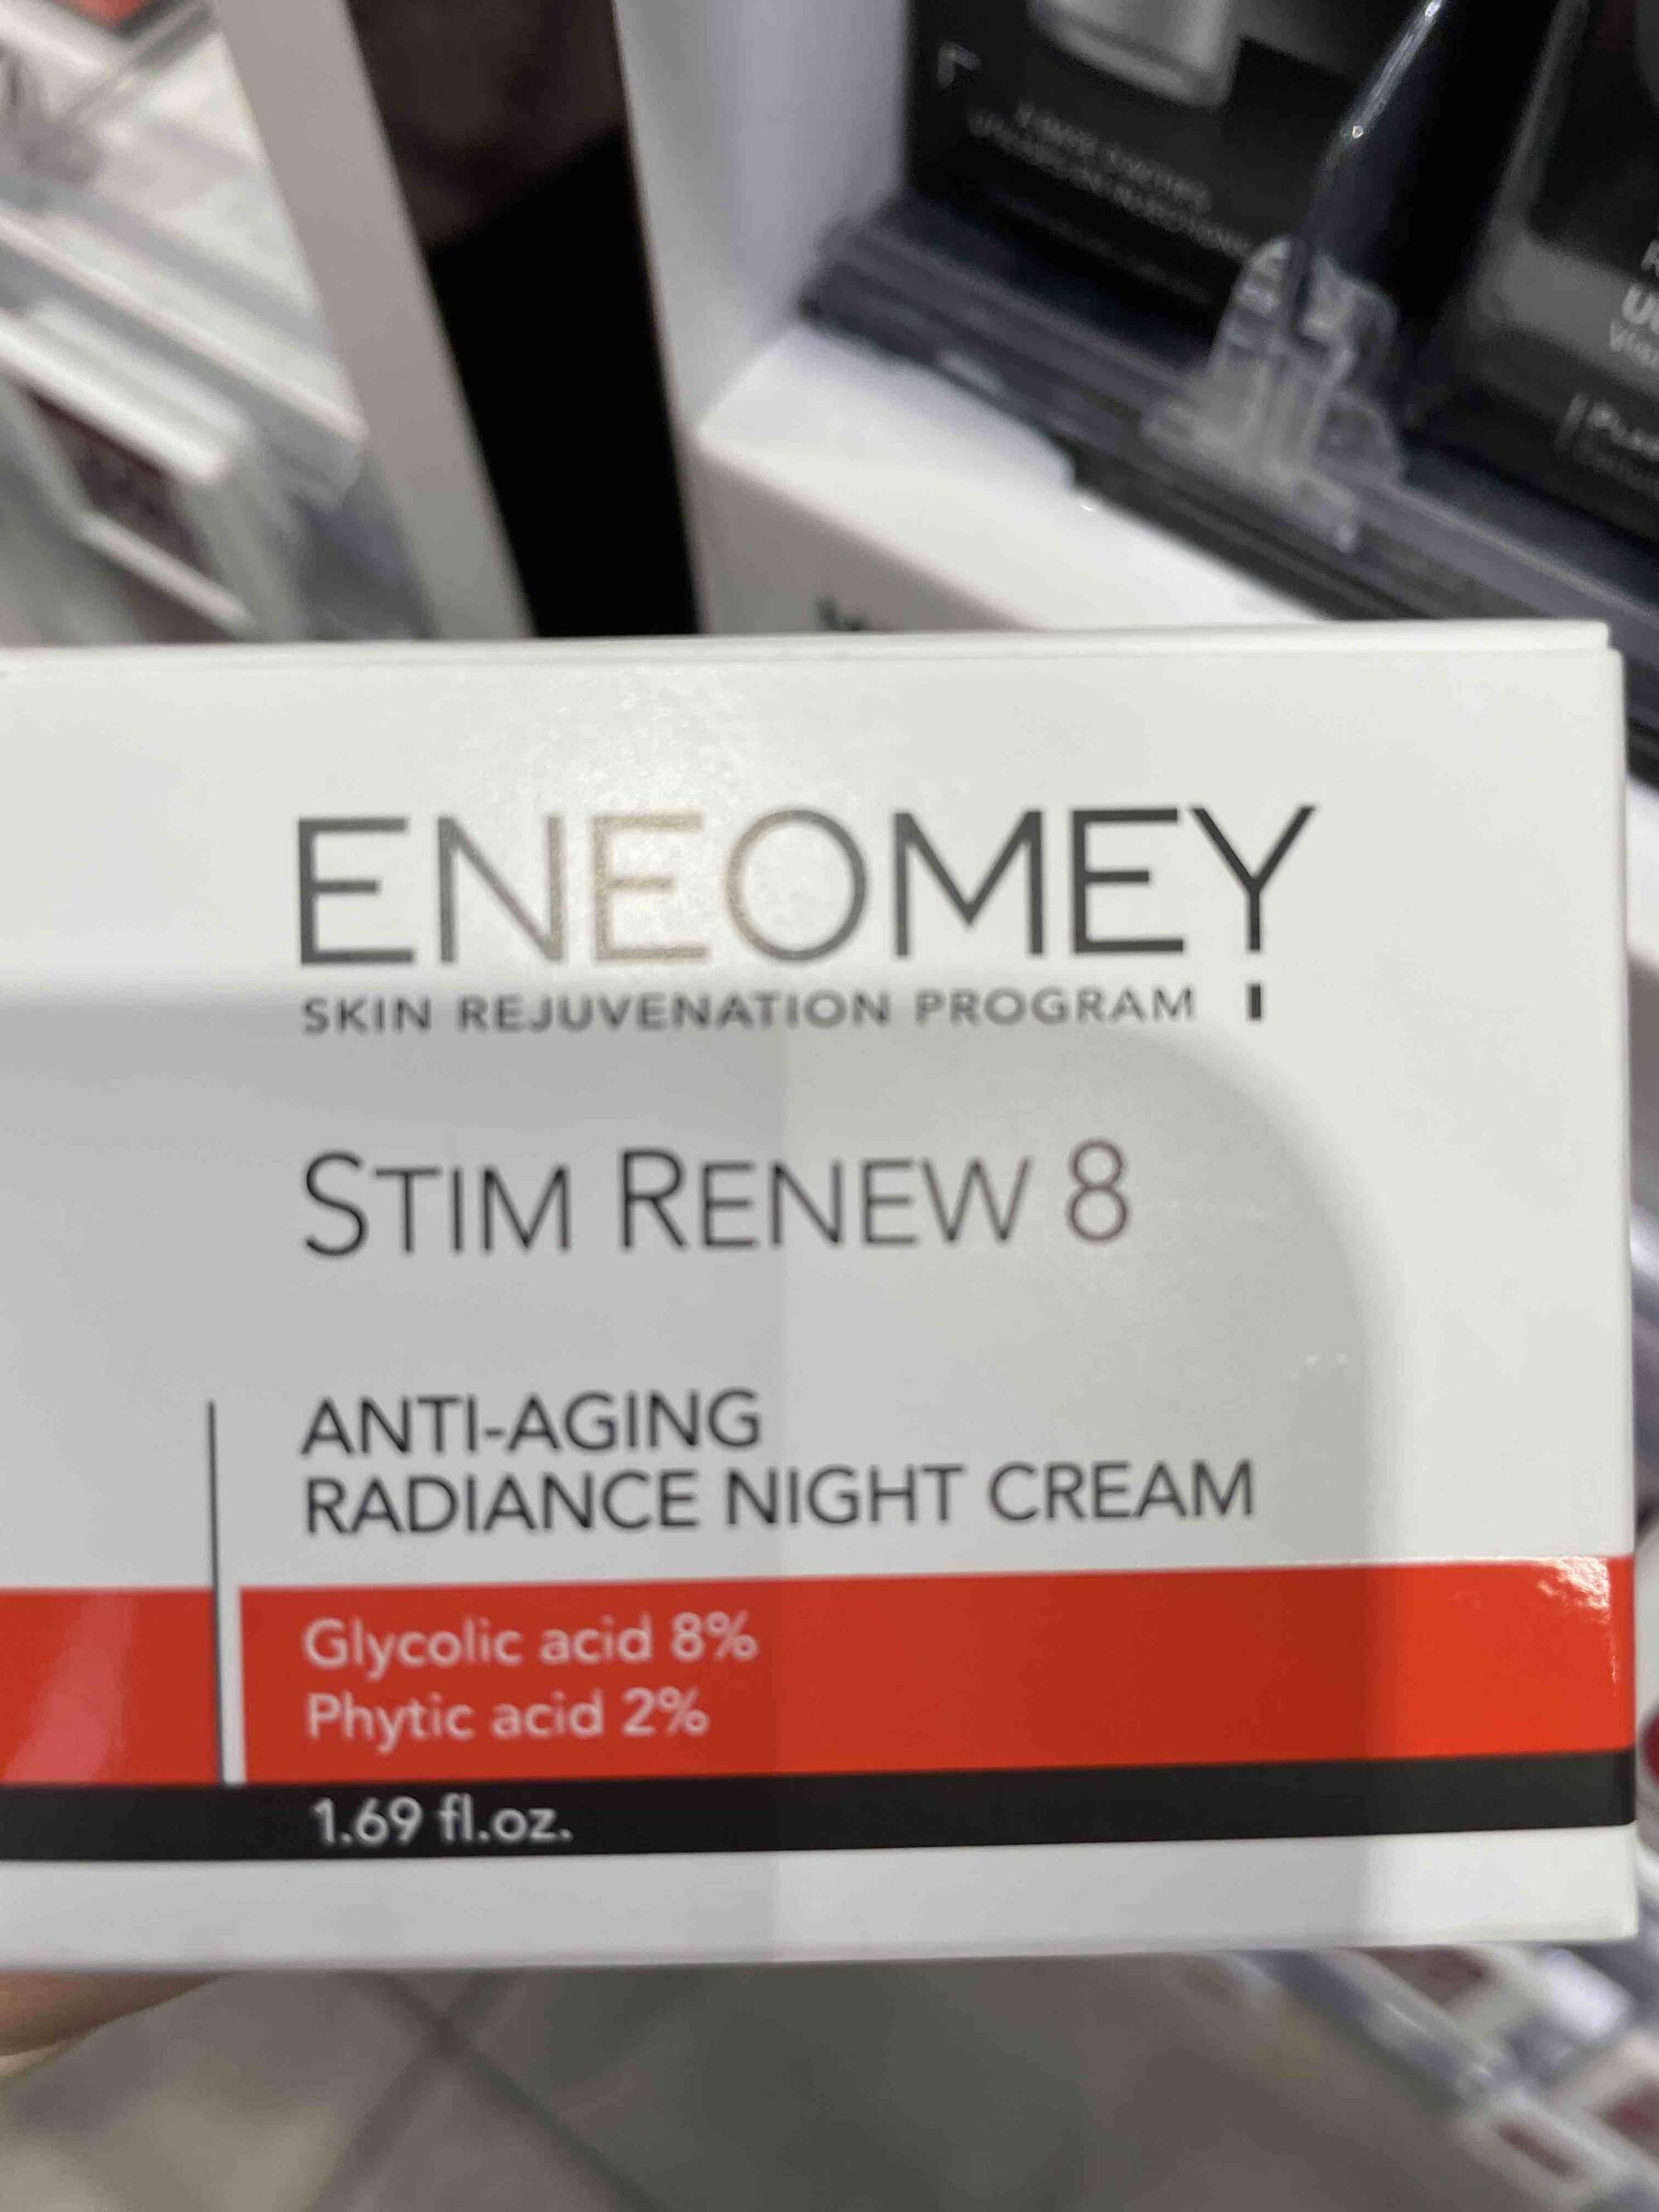 ENEOMEY - Stim renew 8 - Anti-aging radiance night cream